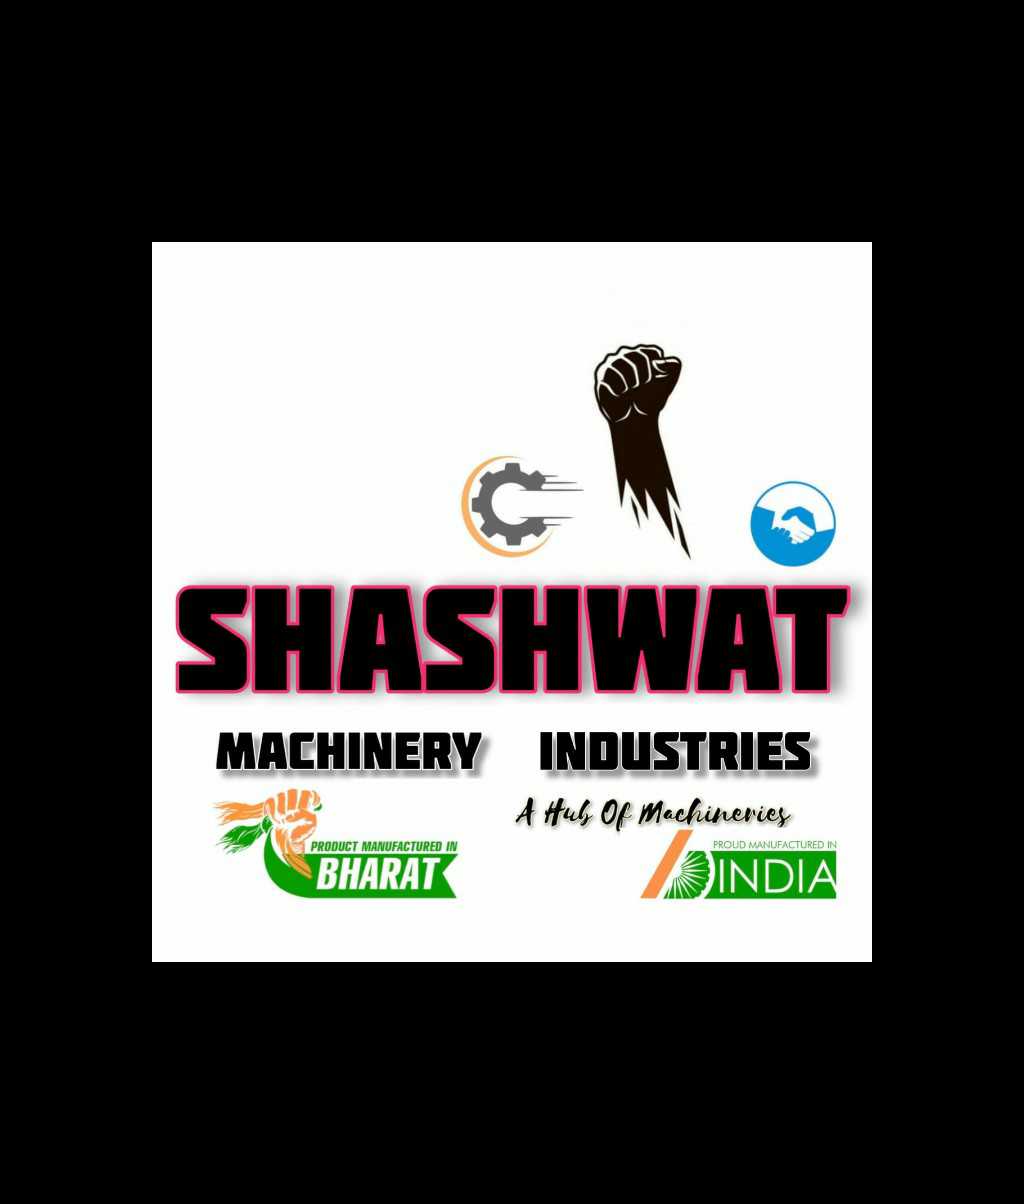 SHASHWAT MACHINERY INDUSTRIES